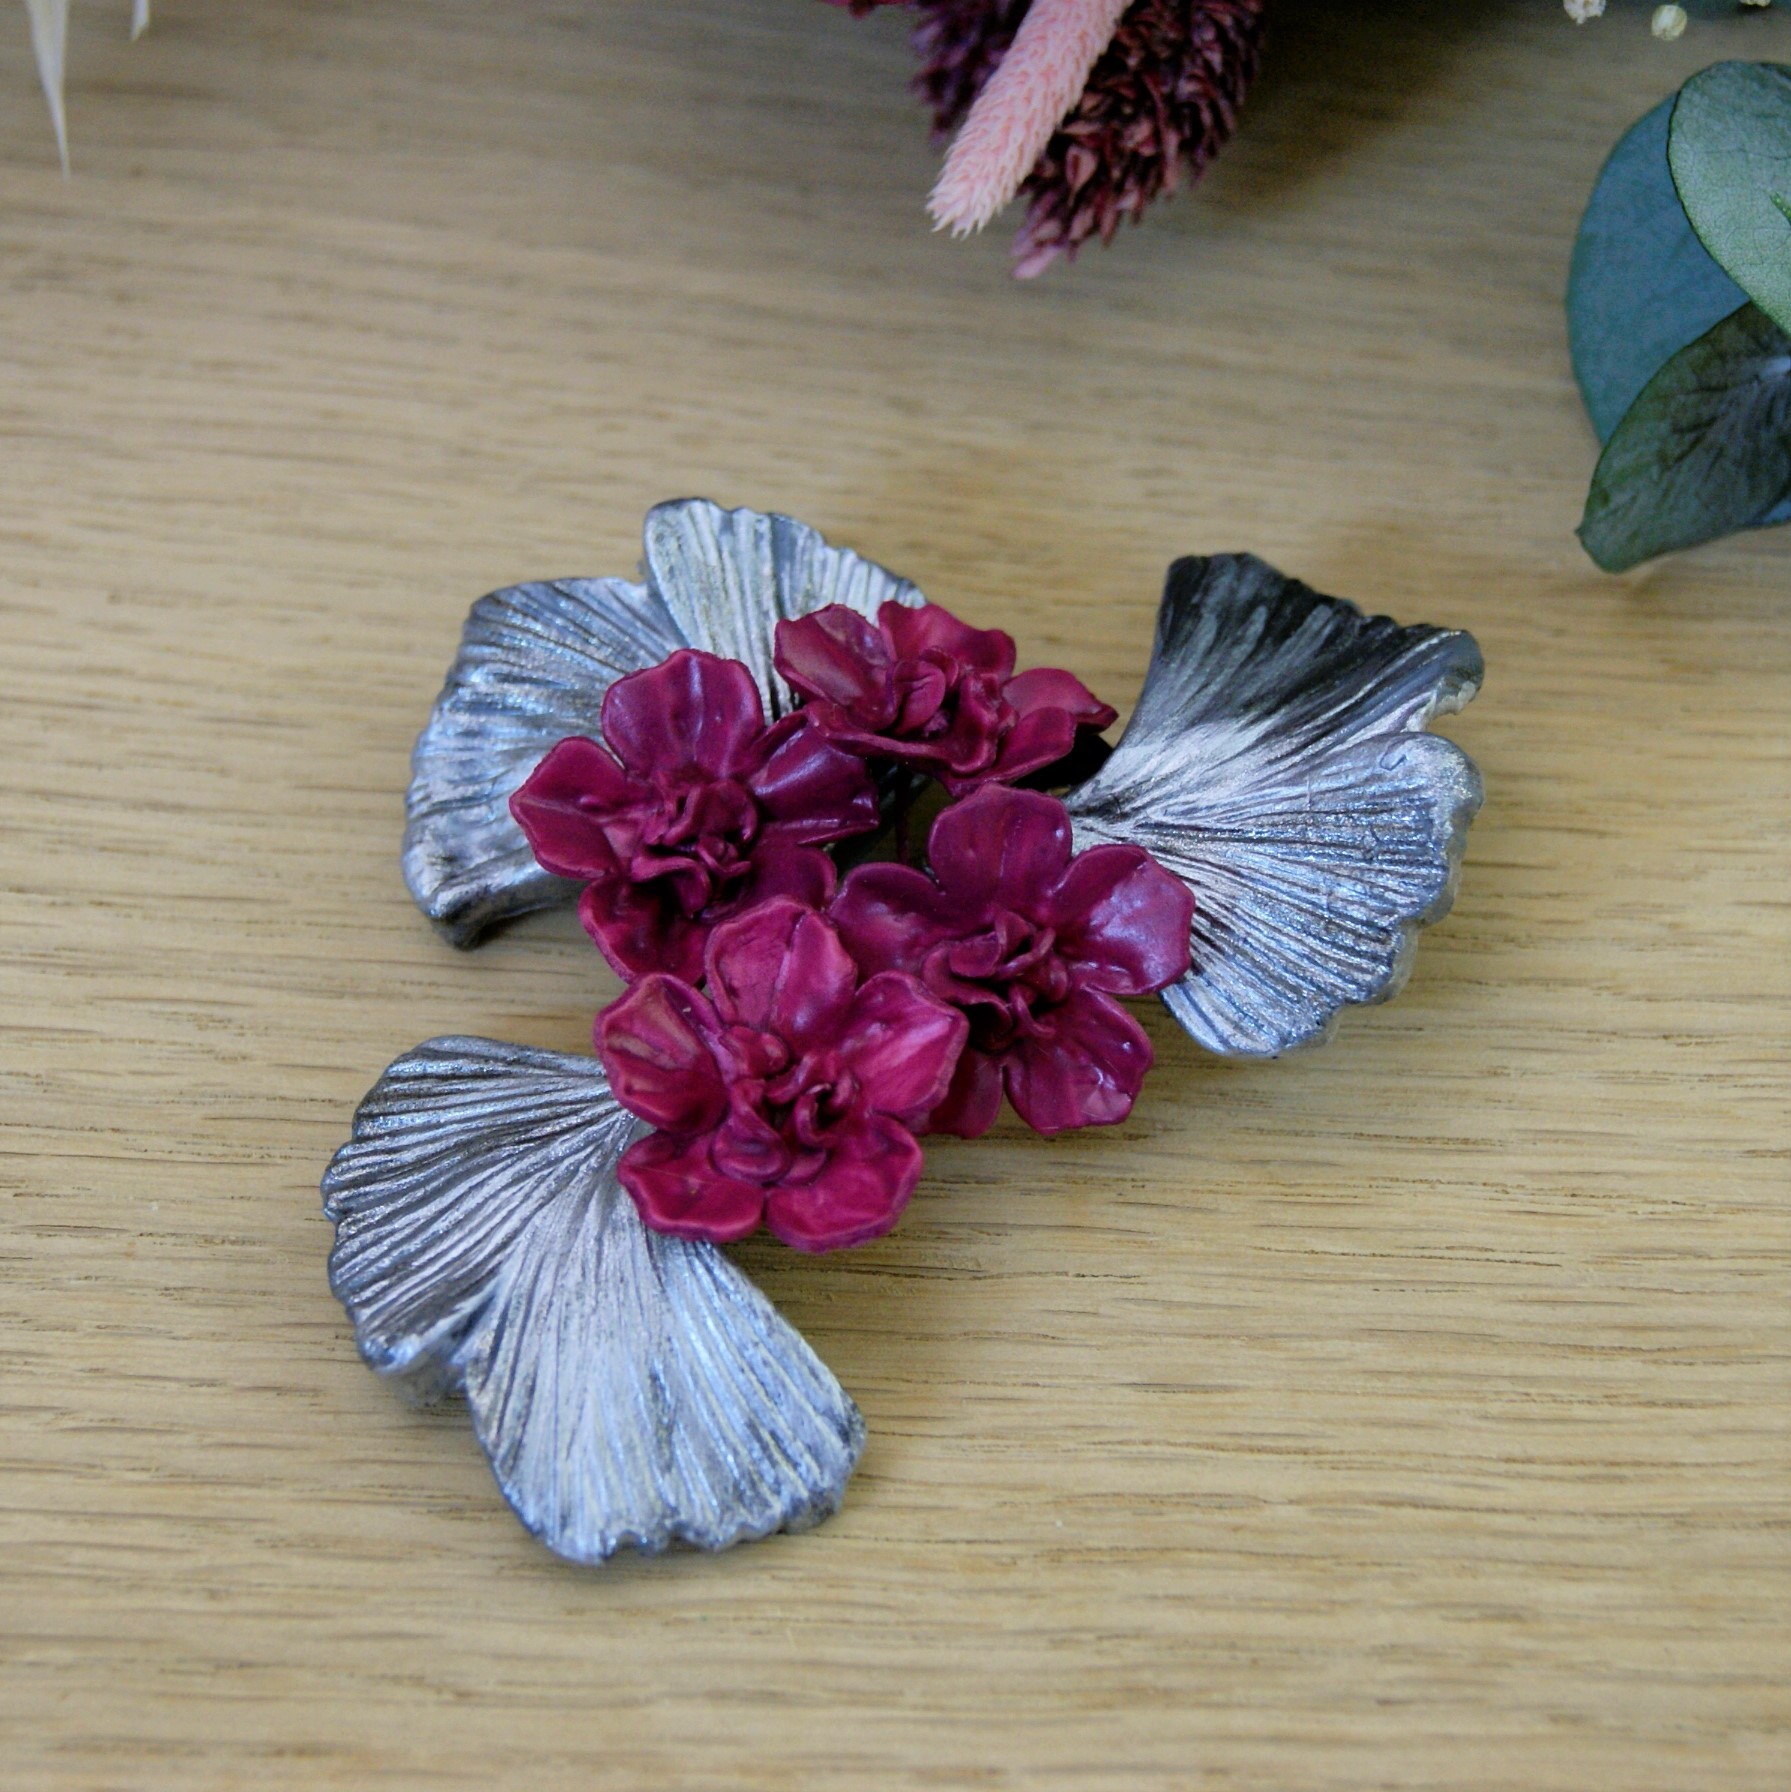 pianista nudo Desconexión Tocado de porcelana fría, con flores fucsia y hojas plateadas.